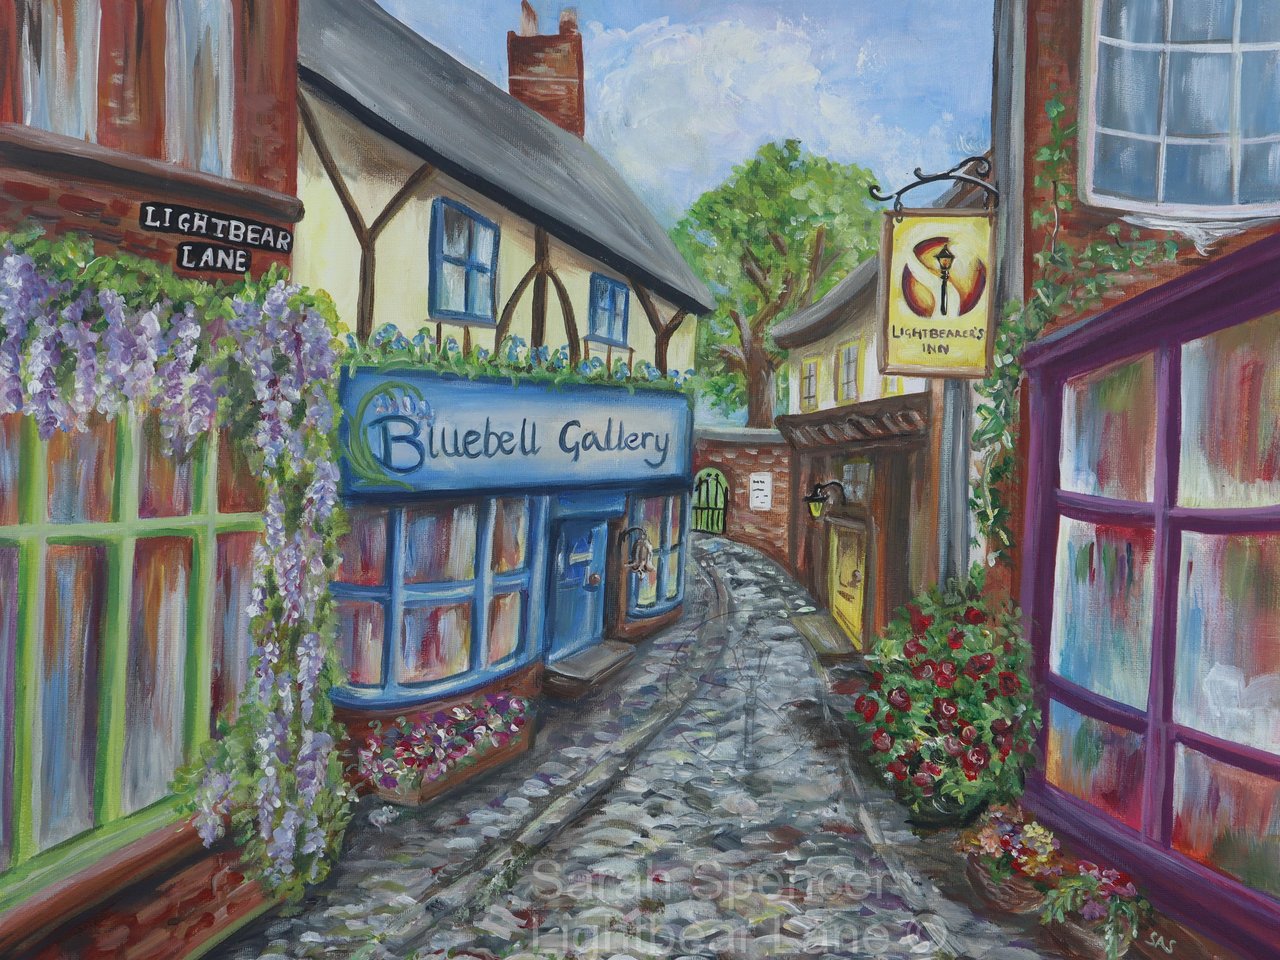 An image of Lightbear Lane with Bluebell Gallery, Lightbearer's Inn, and Books in Brooks bookshop, acrylic on canvas board